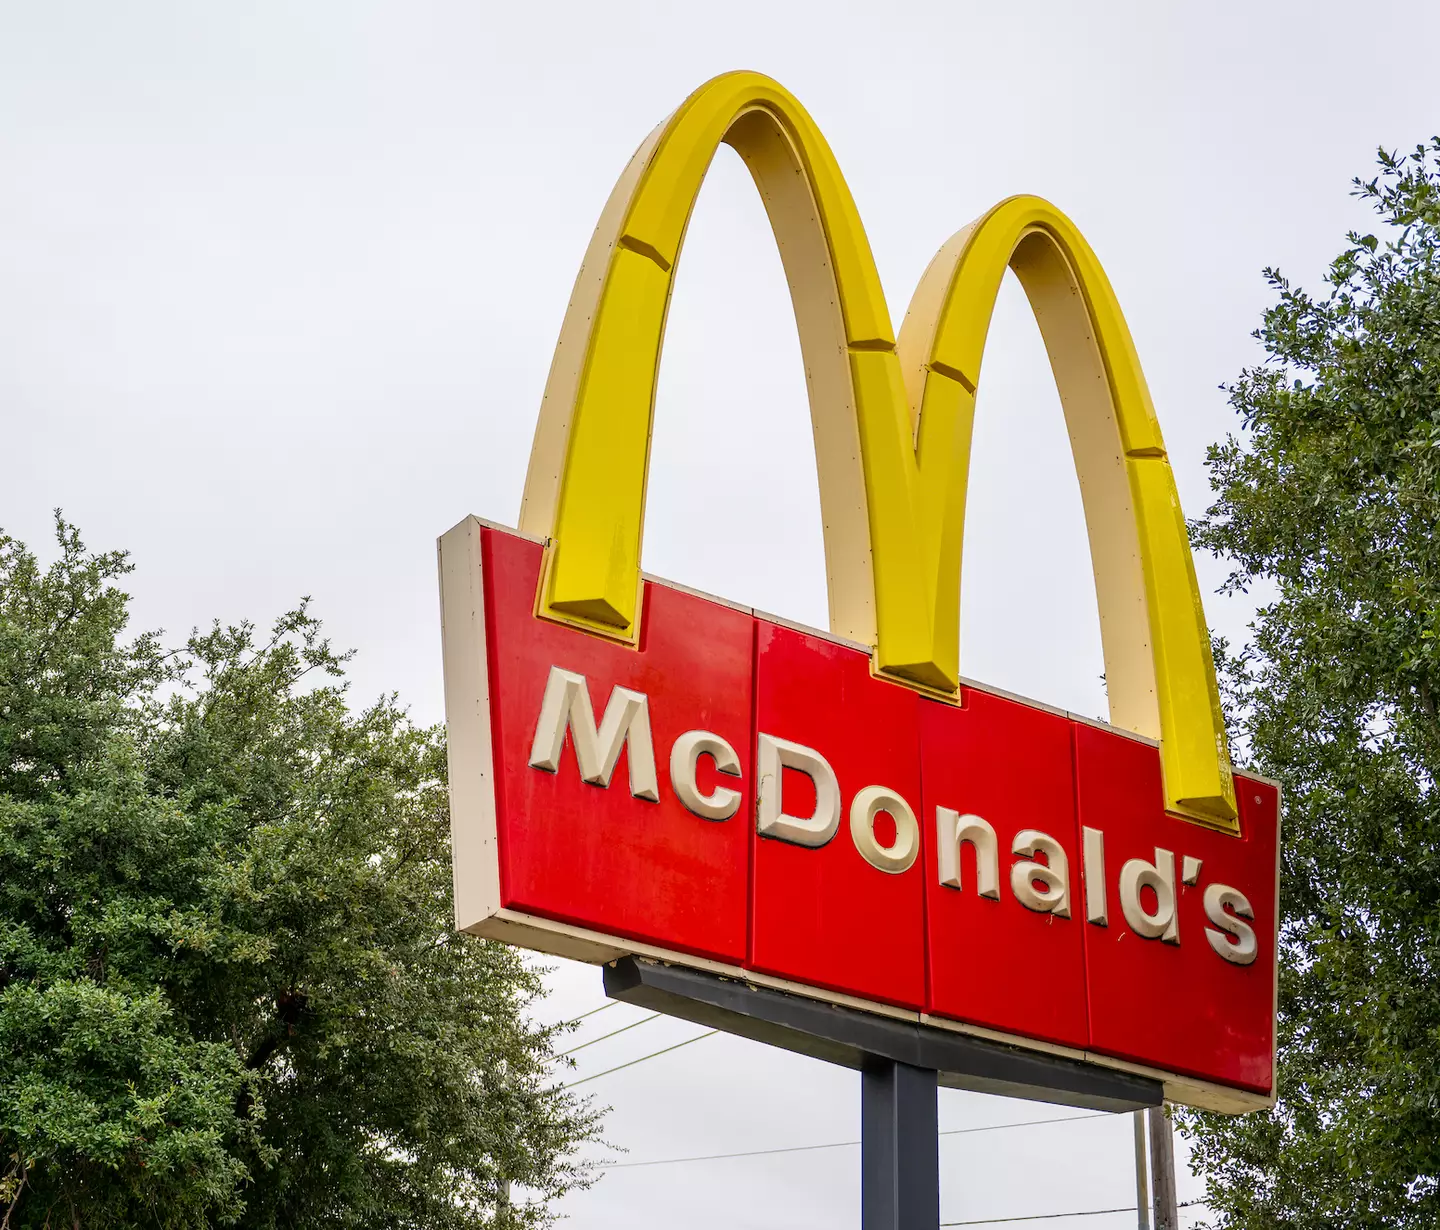 The alleged assault took place at a North Carolina McDonald's.